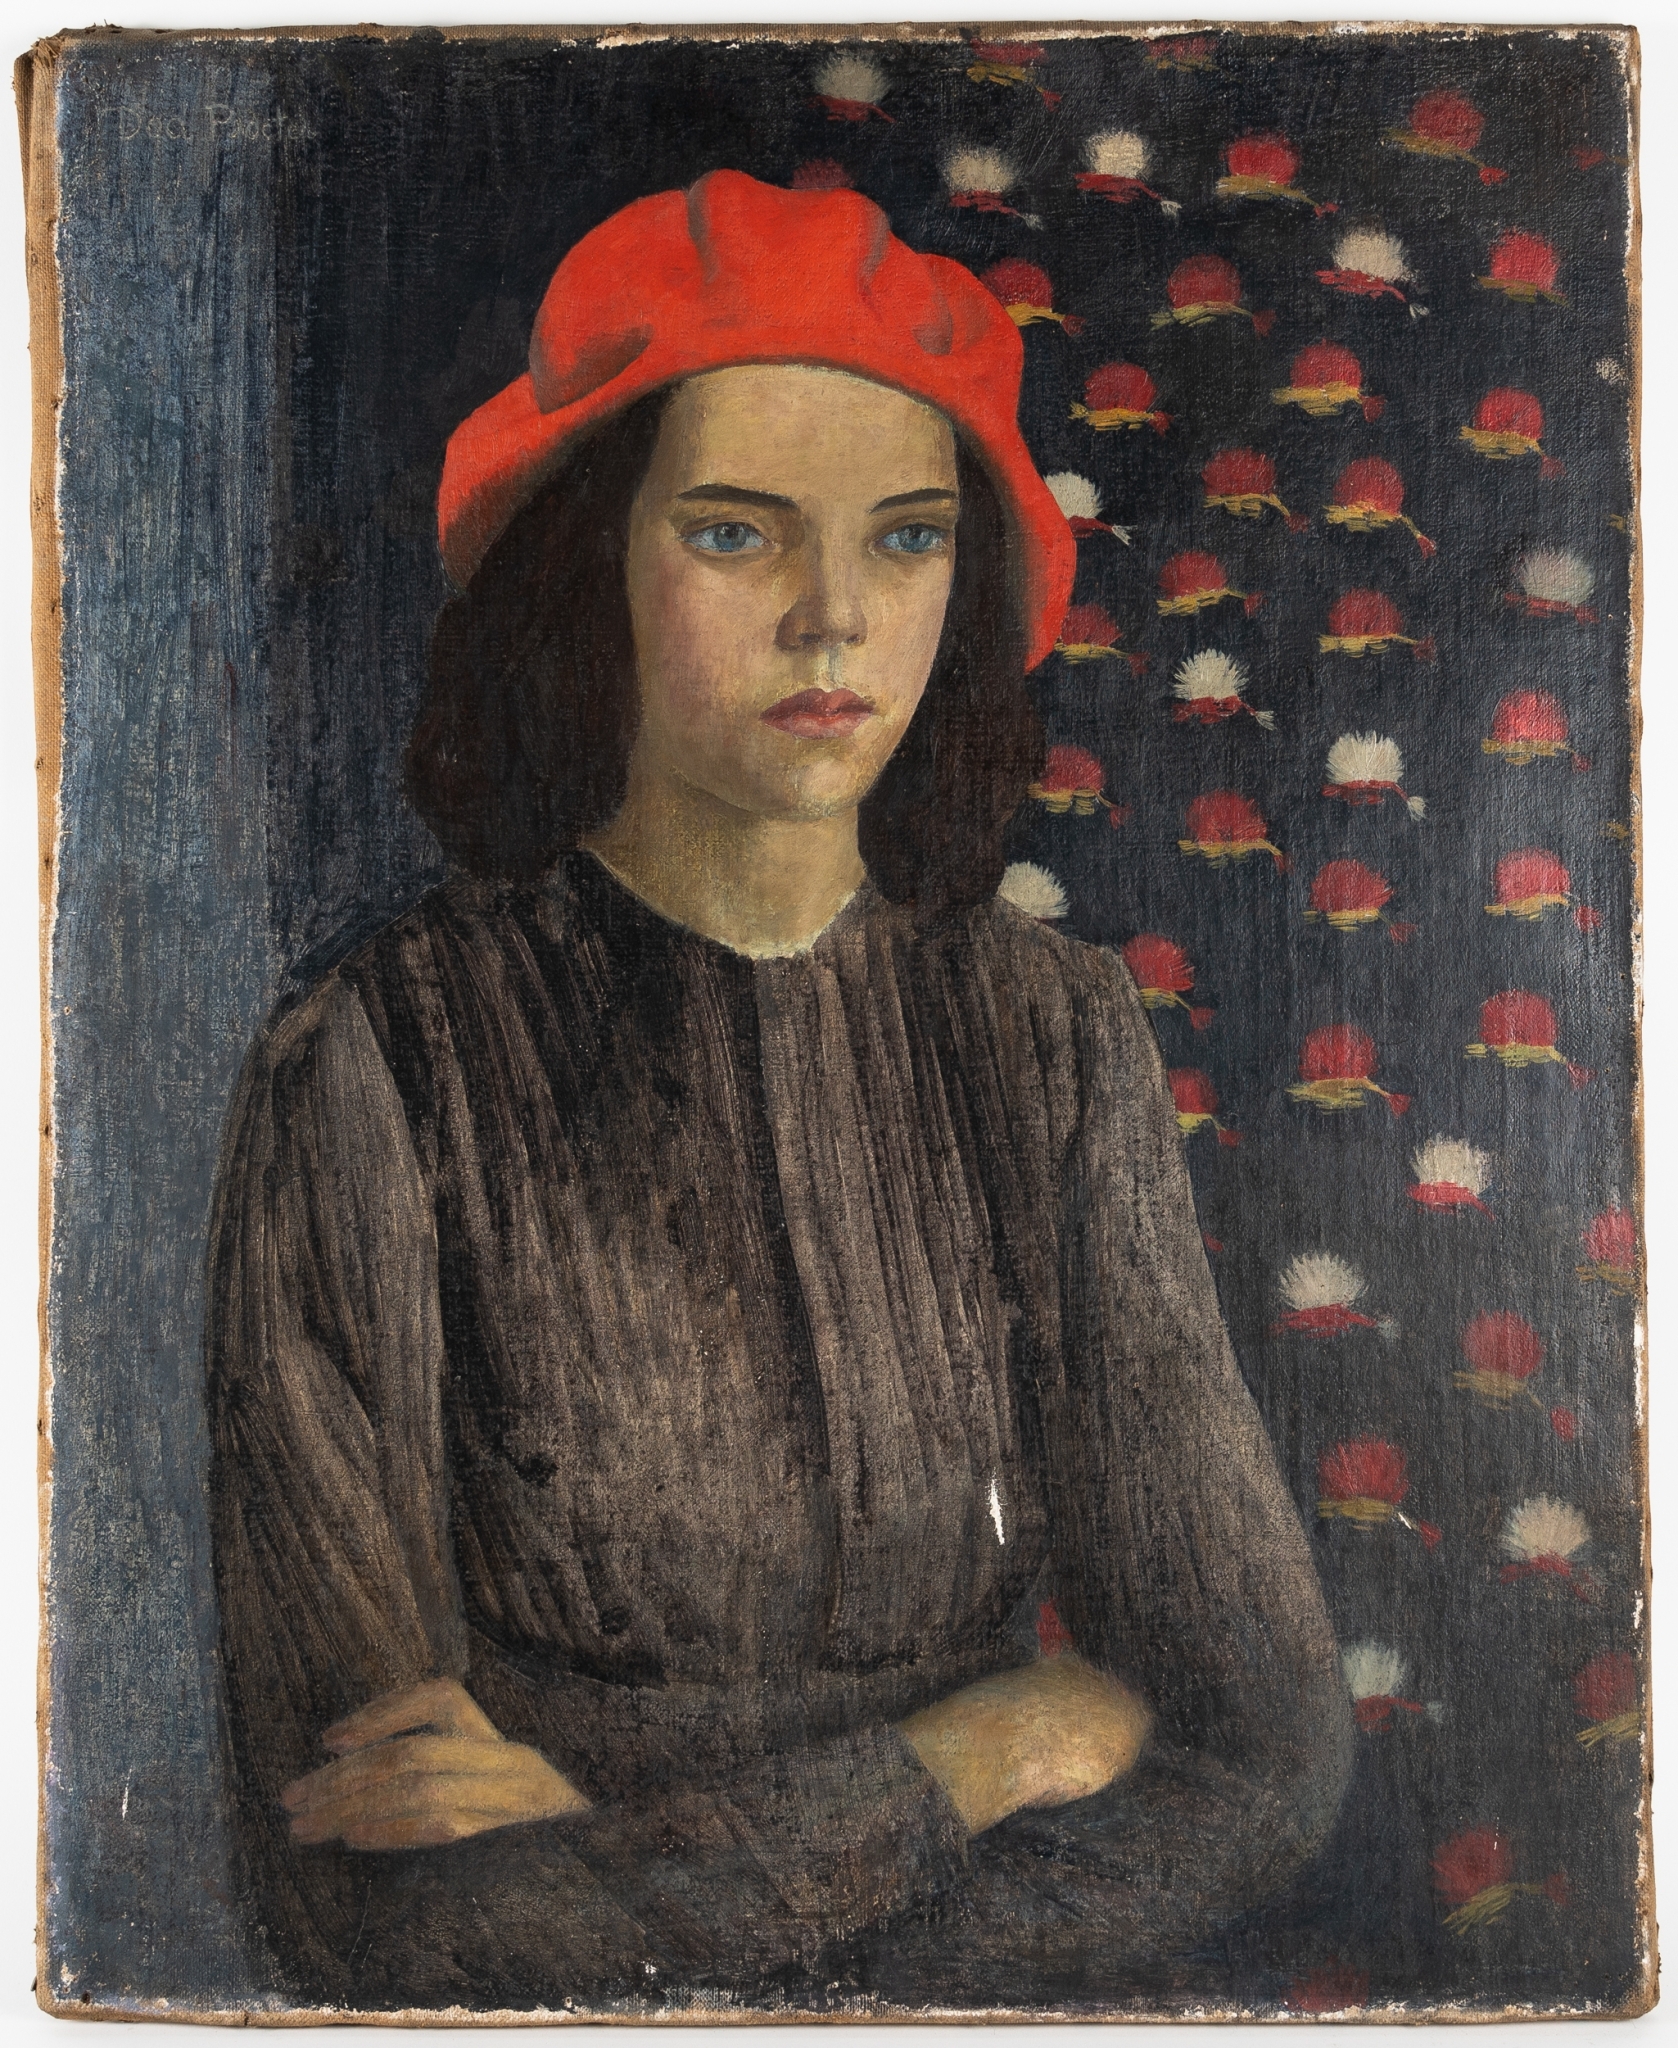 DOD PROCTER (BRITISH, 1890-1972) Girl in a Black Dress (c. 1915)